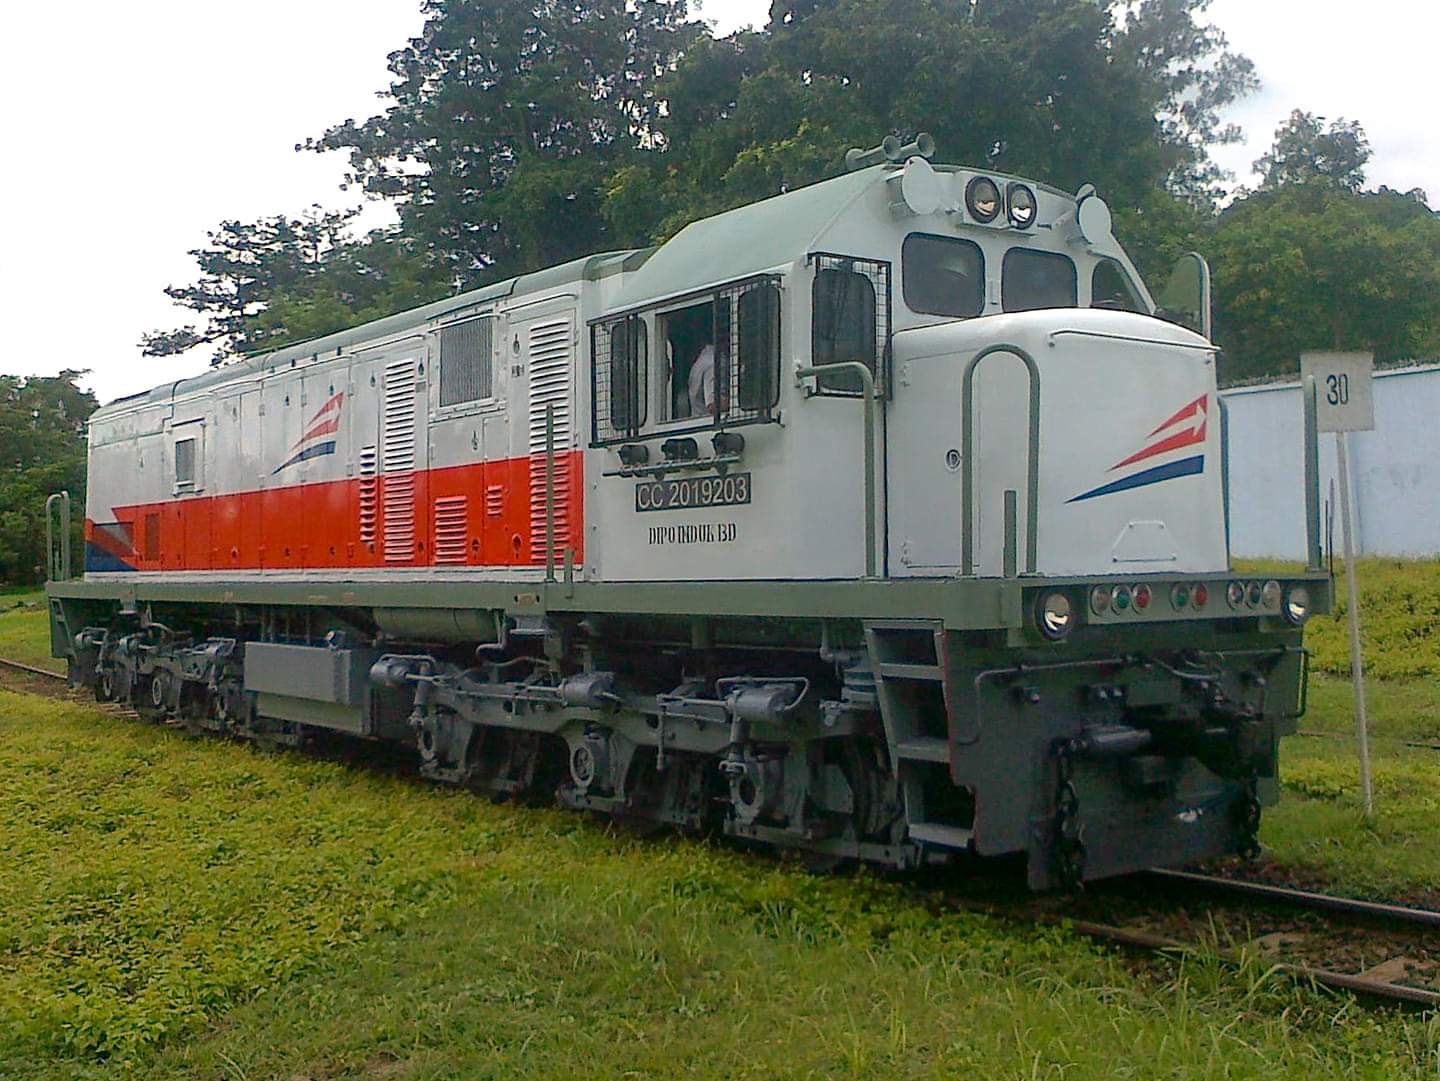 On Board Responden pada Lokomotif CC 201 92 03 yang berbentuk lingkaran dan batang besi di atas plat nomor lokomotif | Foto: Bima Budi Satria